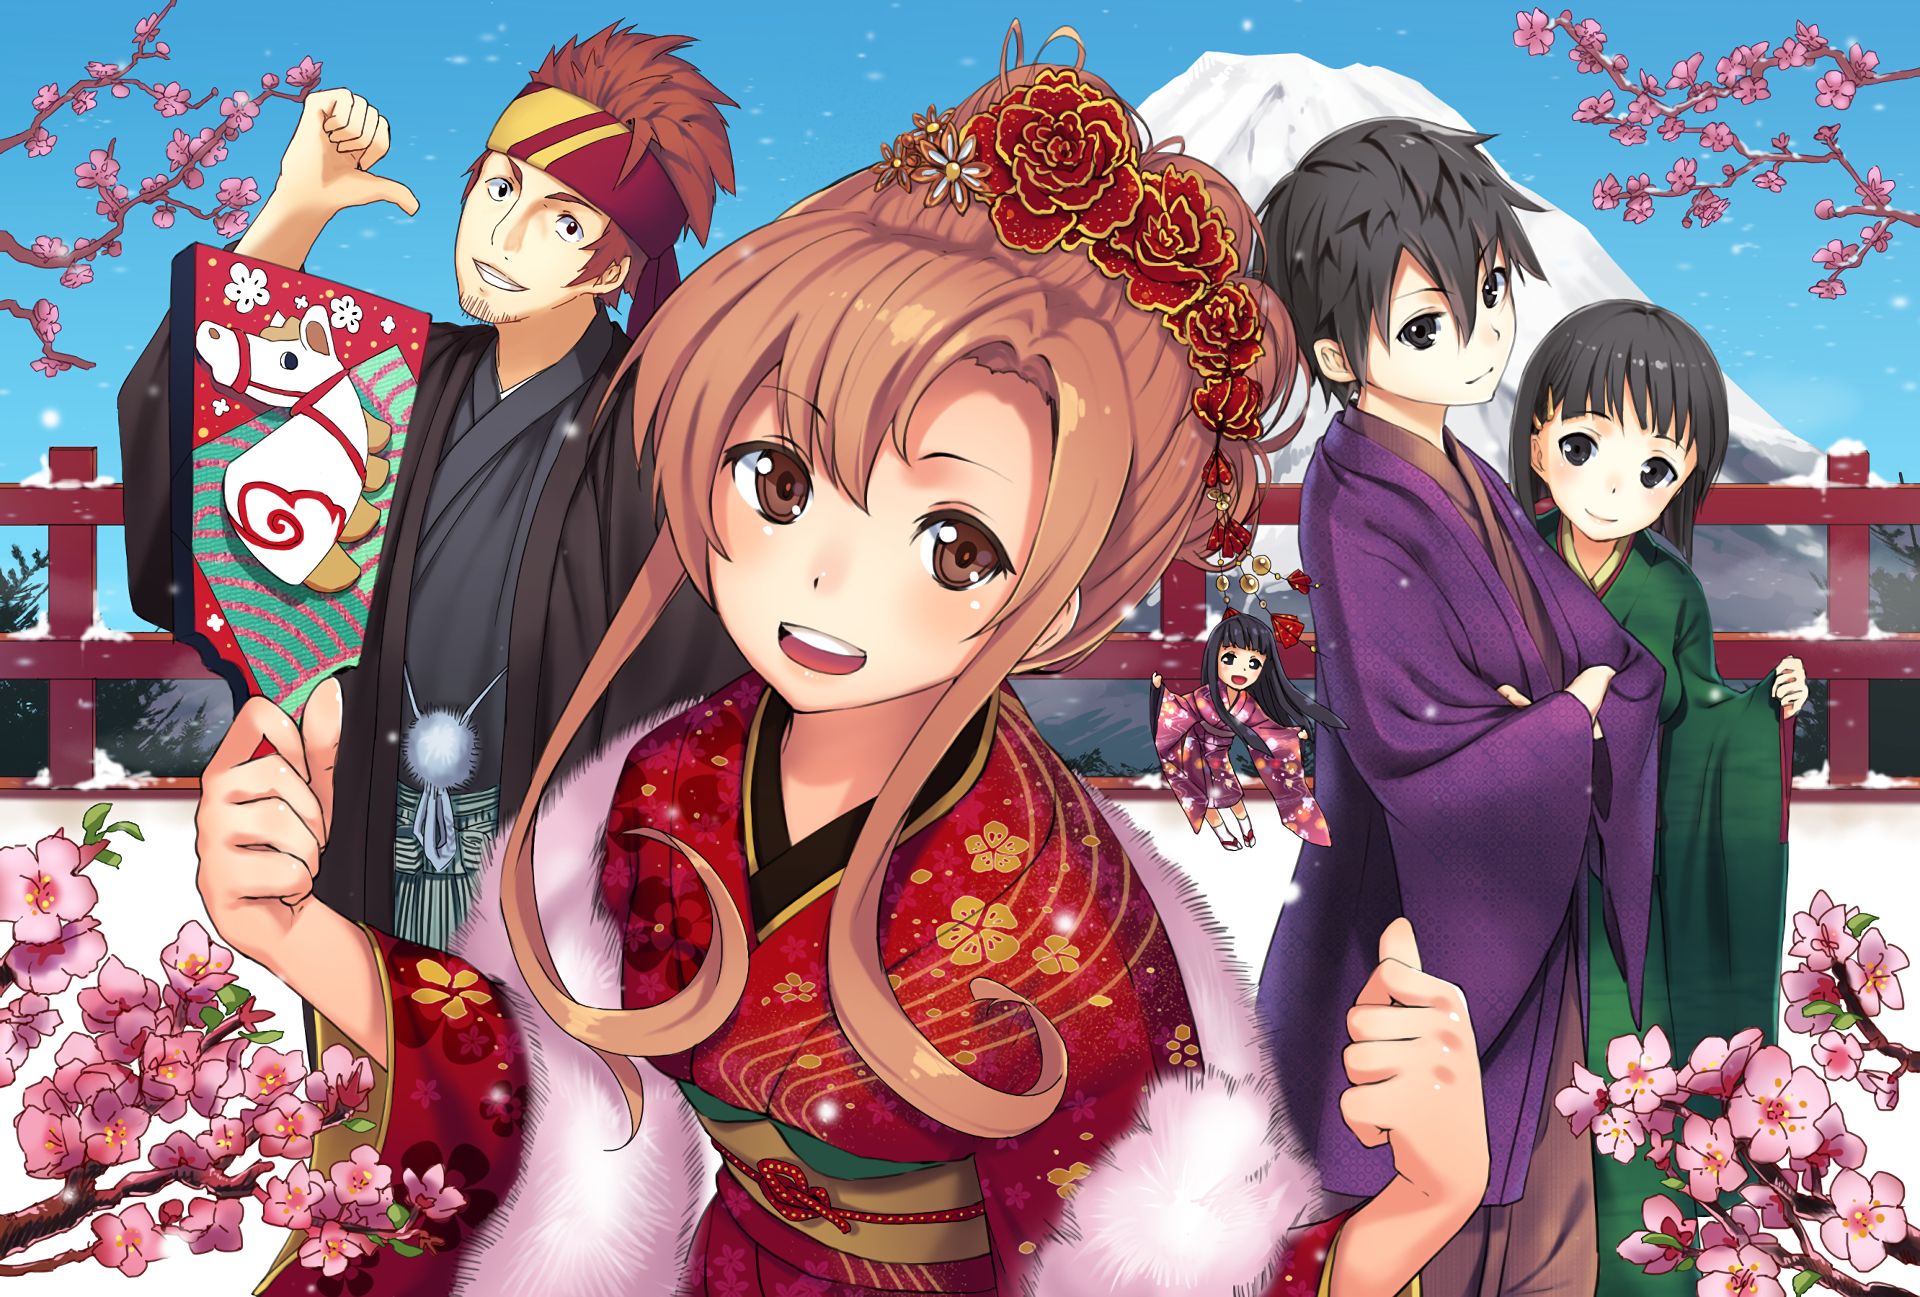 Descarga gratis la imagen Sword Art Online, Animado, Asuna Yuuki, Kirito (Arte De Espada En Línea), Klein (Arte De Espada En Línea), Yui (Arte De Espada En Línea), Leafa (Arte De Espada En Línea) en el escritorio de tu PC